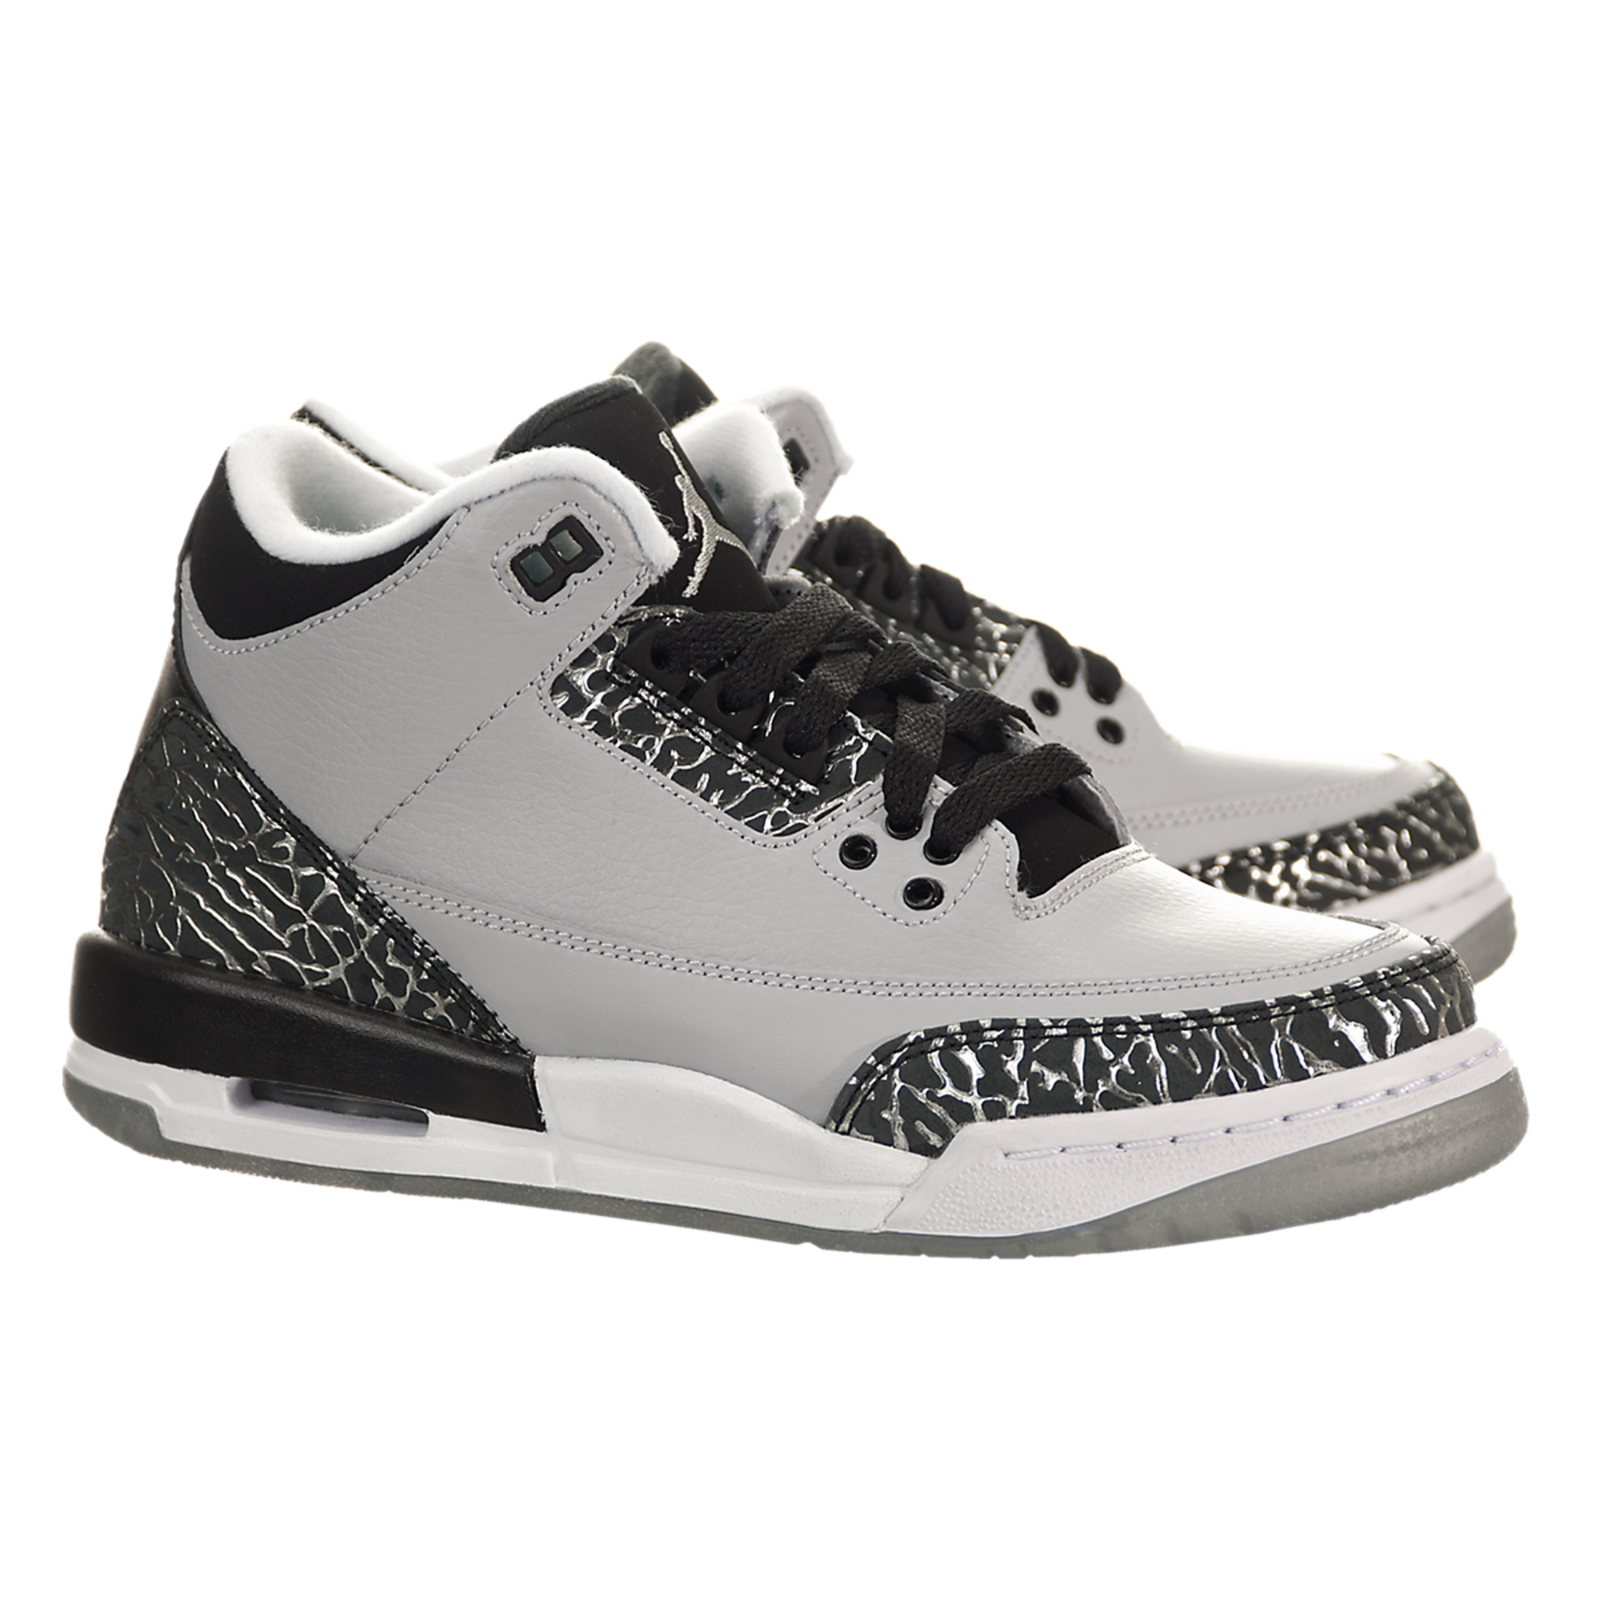 Air Jordan III (3) Retro (Kids) - 398614-004 - Sneakerhead.com ...